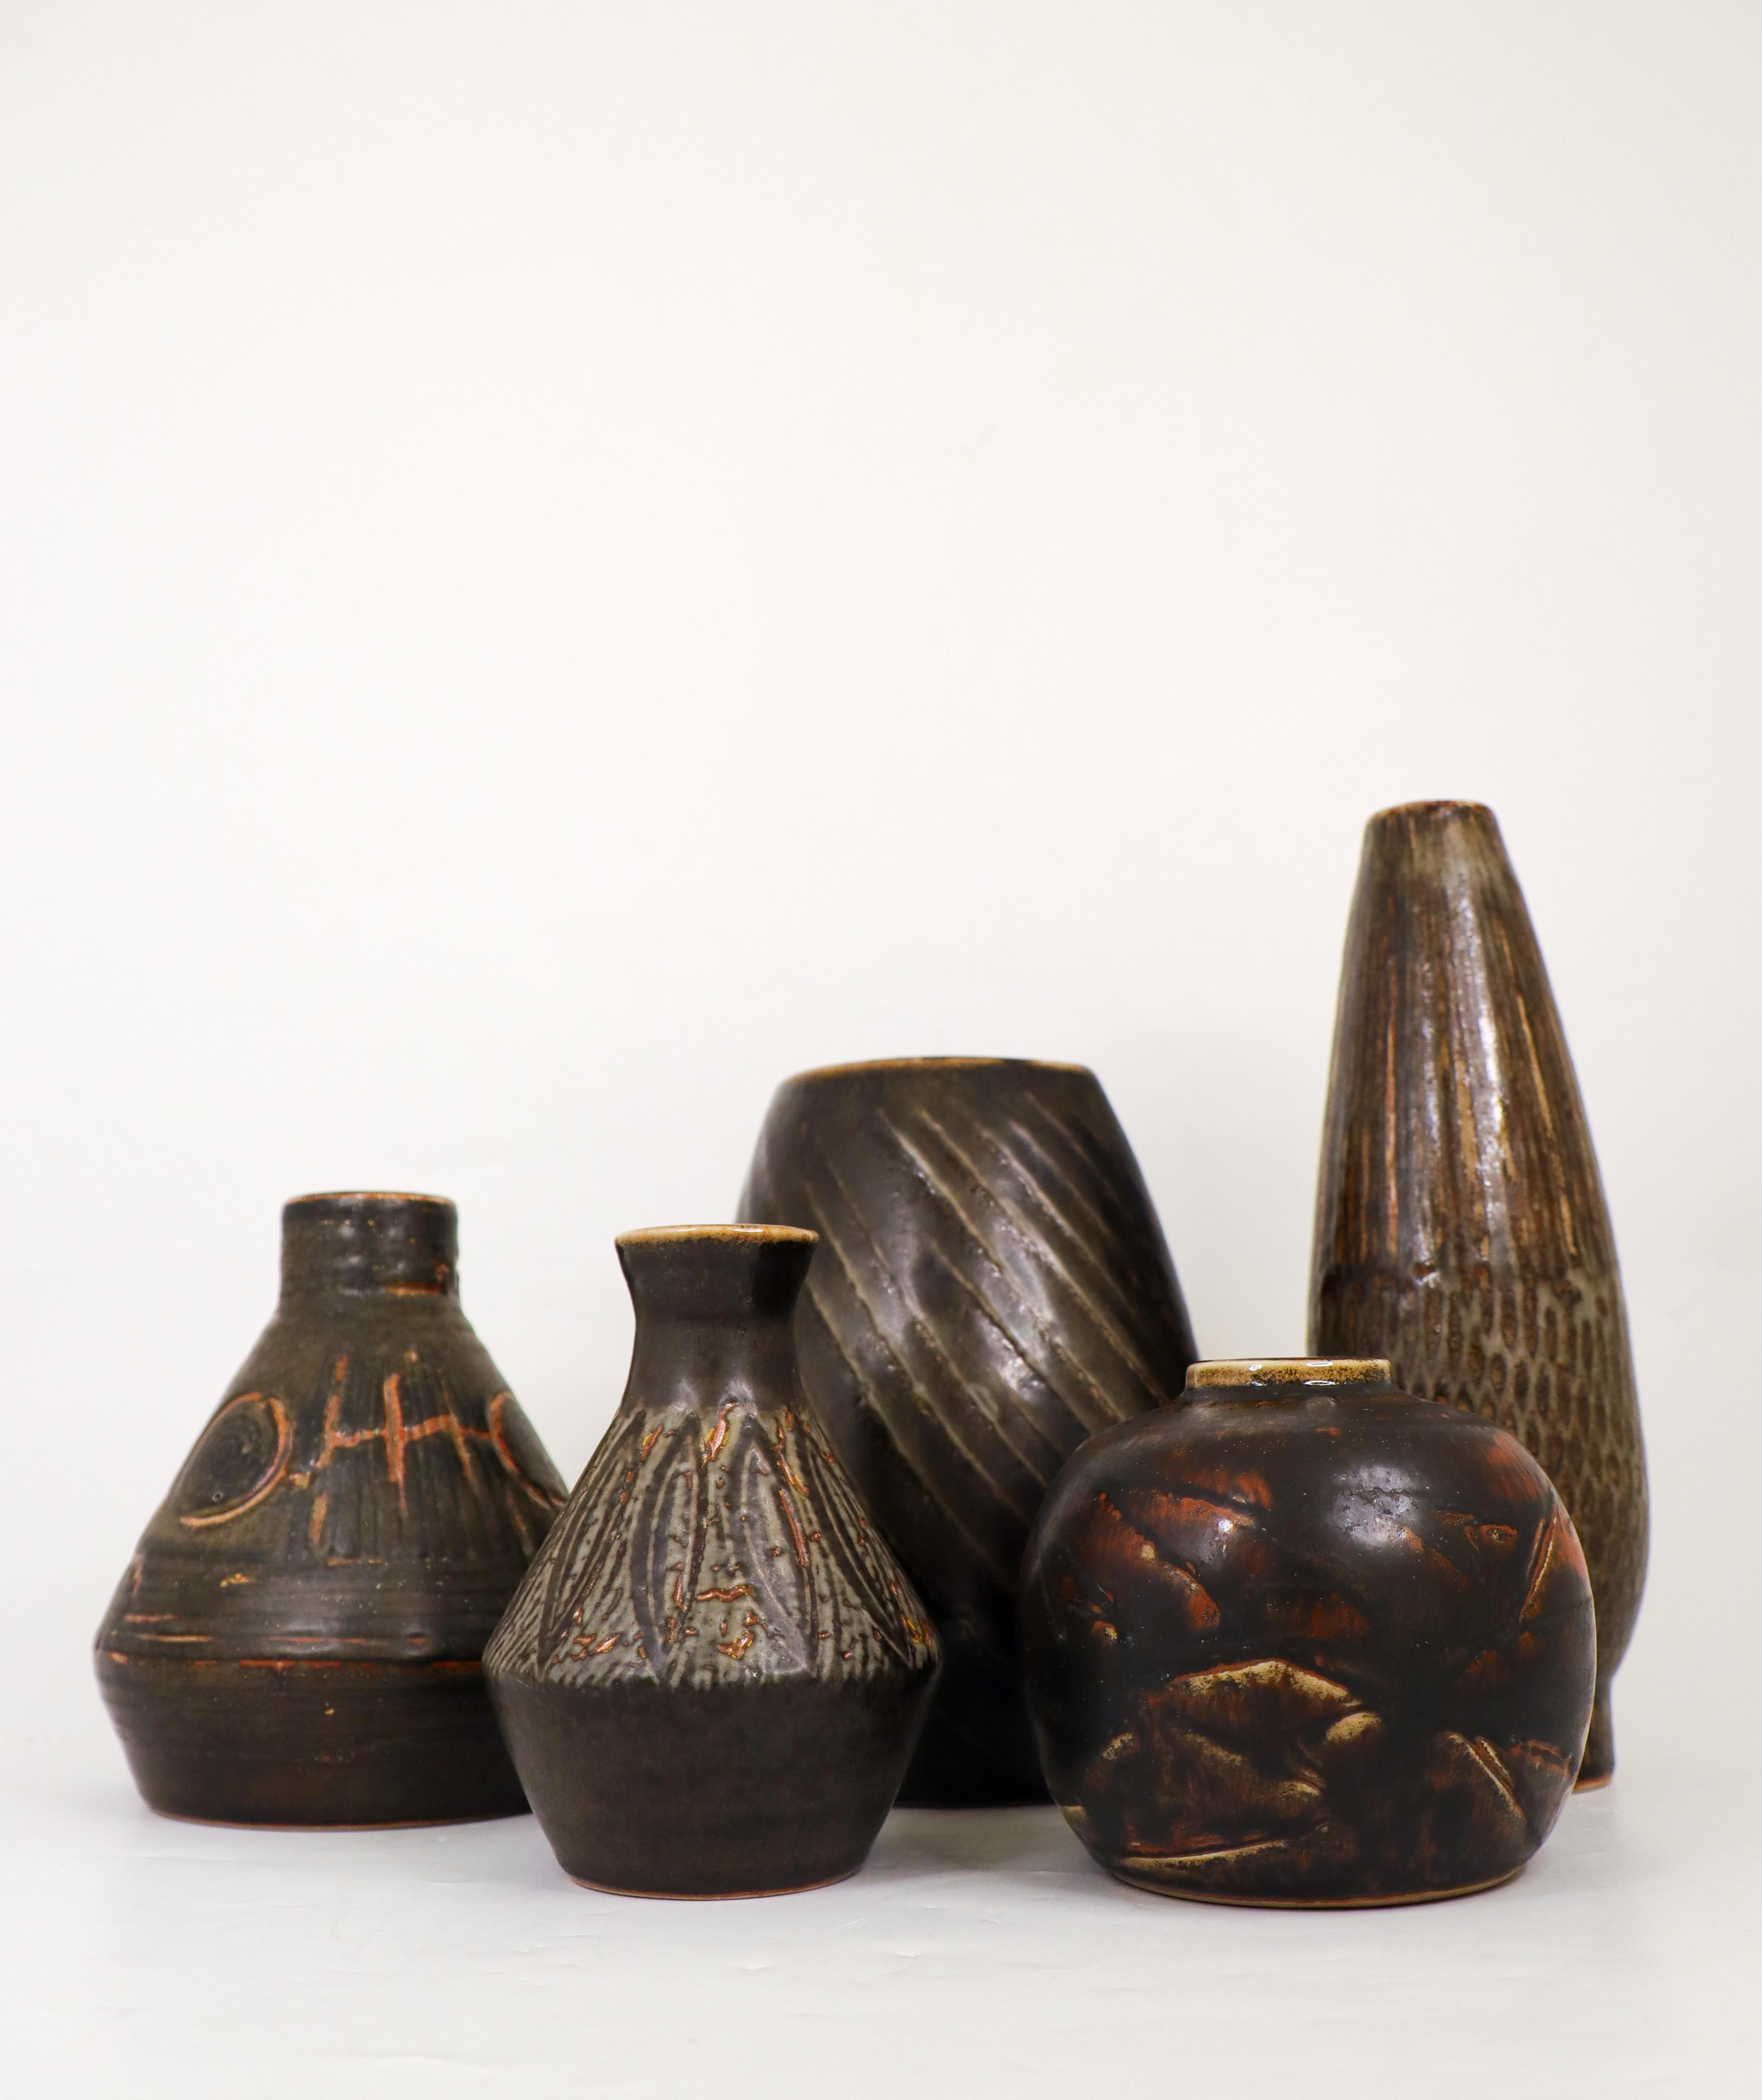 Suédois Groupe de 5 vases Brown Céramique, Rörstrand - Carl-Harry Stålhane en vente